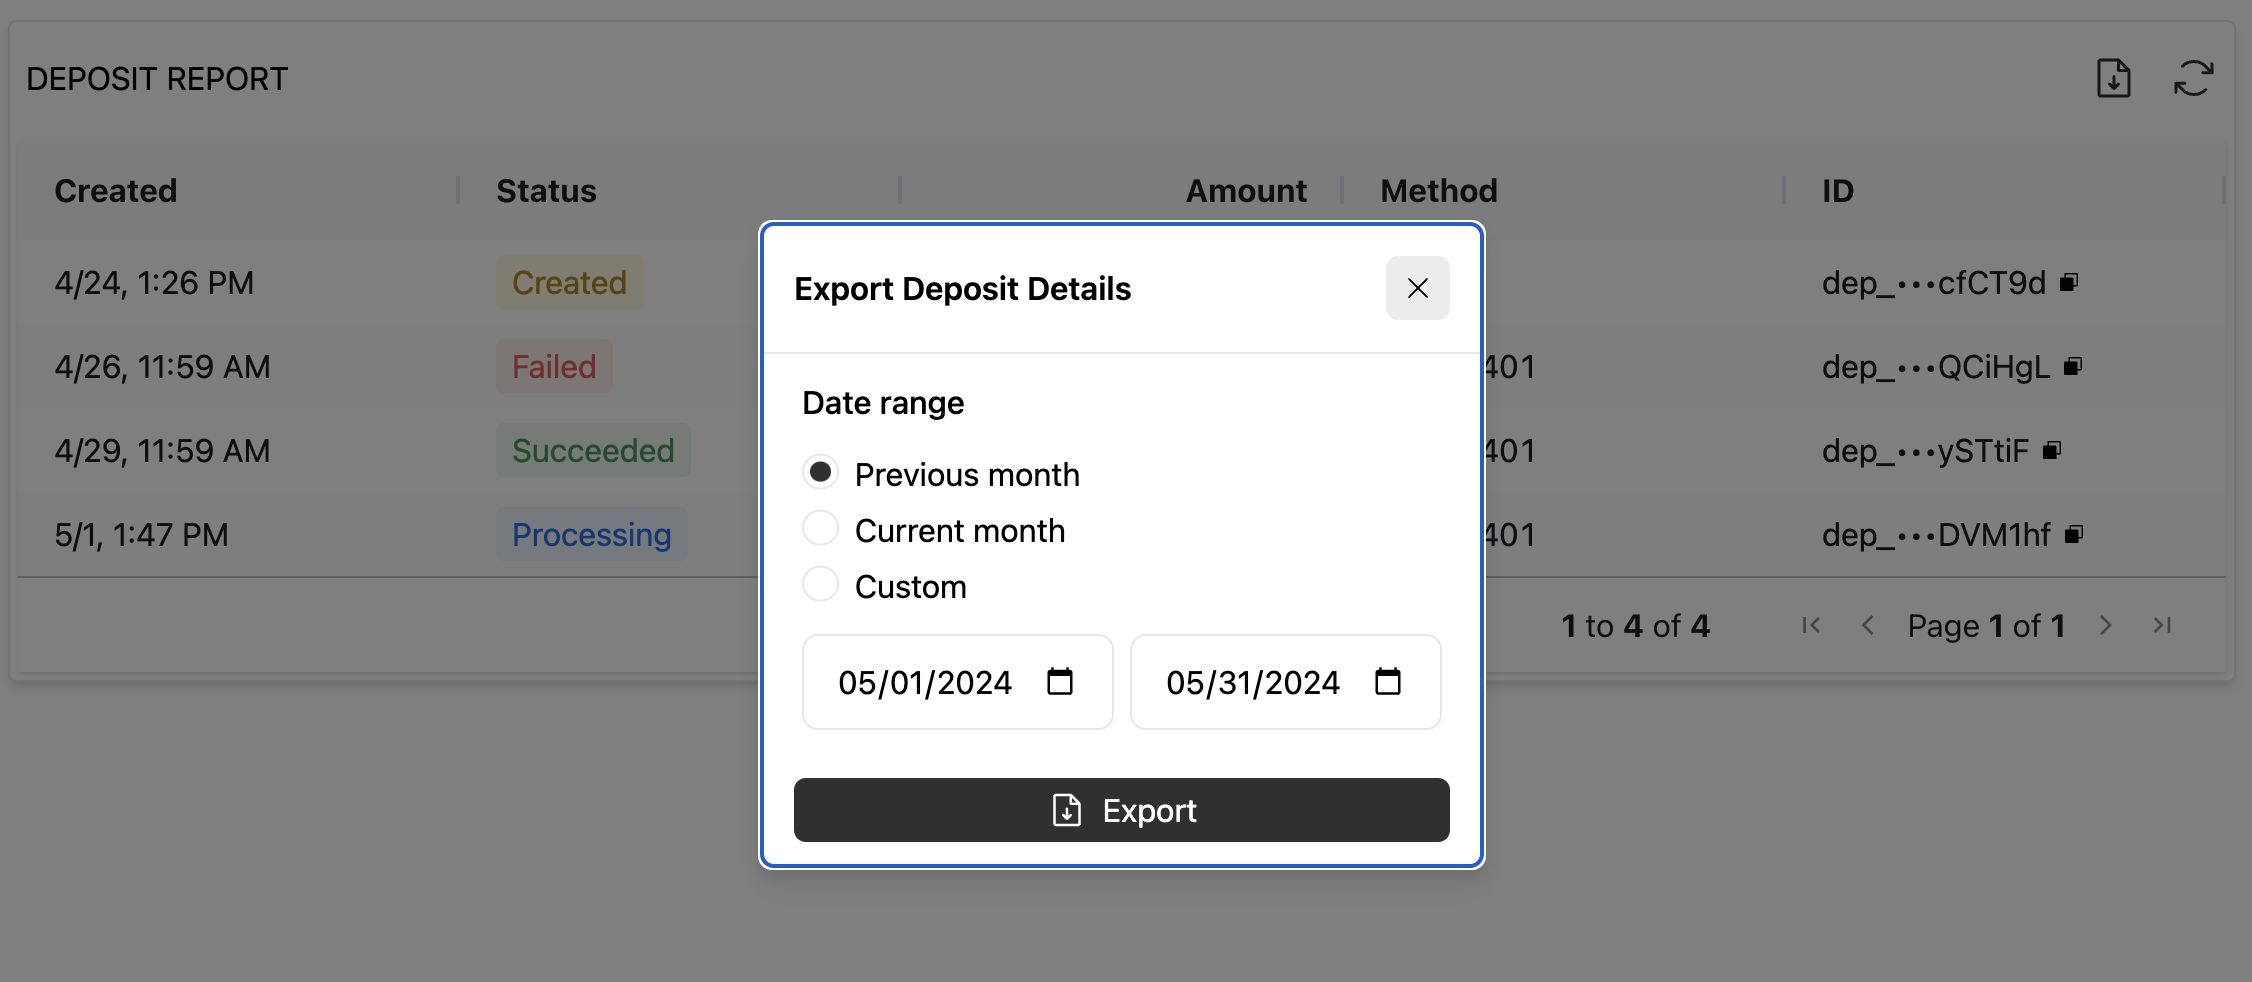 Deposits activity report export modal